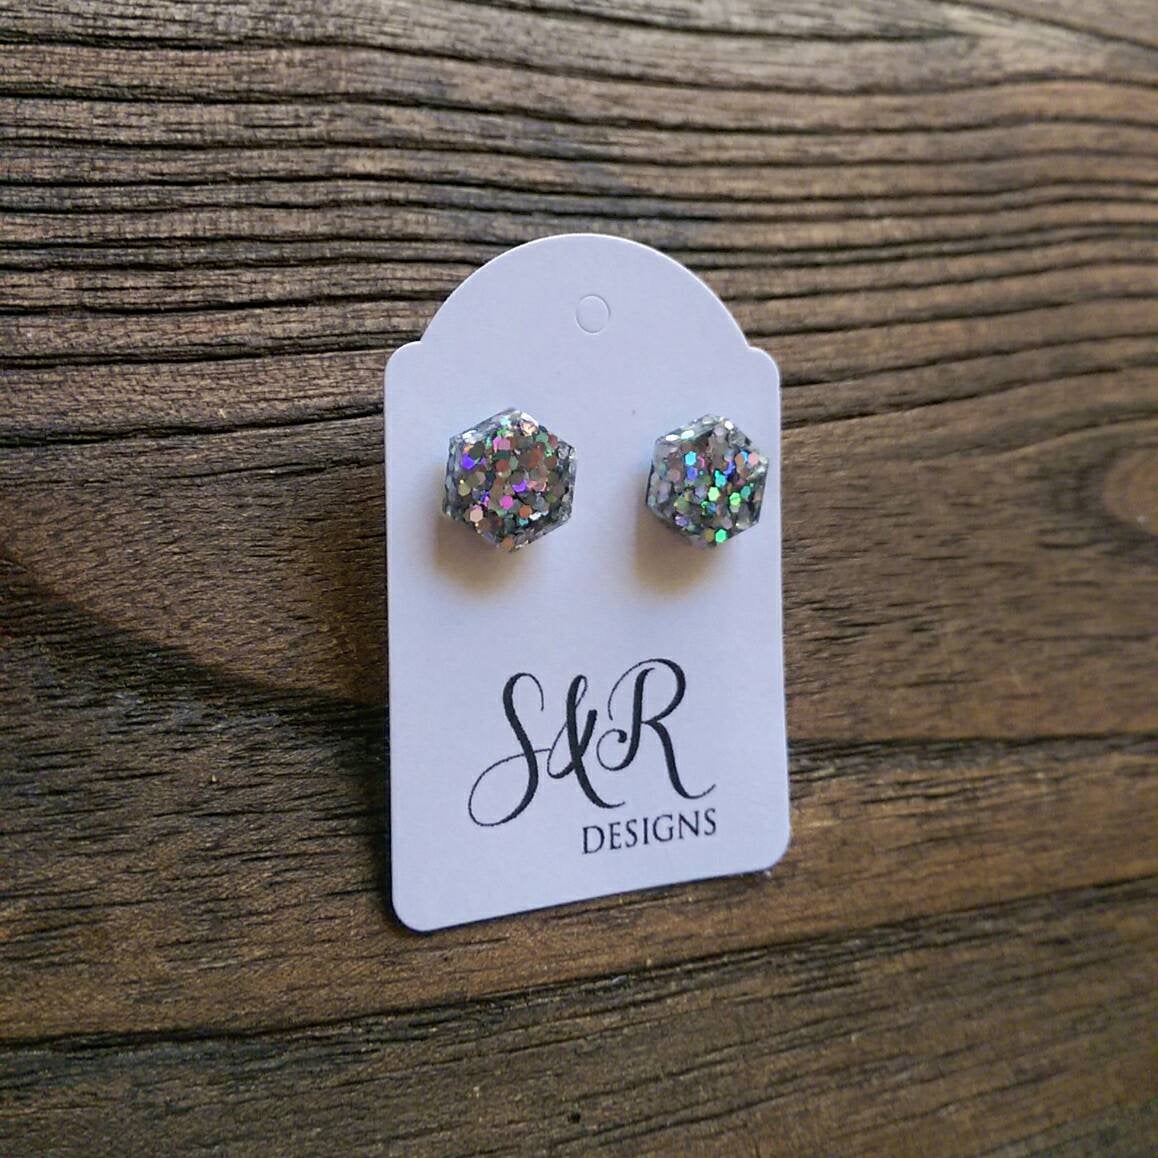 Hexagon Stud Earring, Resin Silver holographic Mix Stud Glitter Earrings. Stainless Steel Stud Earrings. 10mm or Mini Earrings 6mm